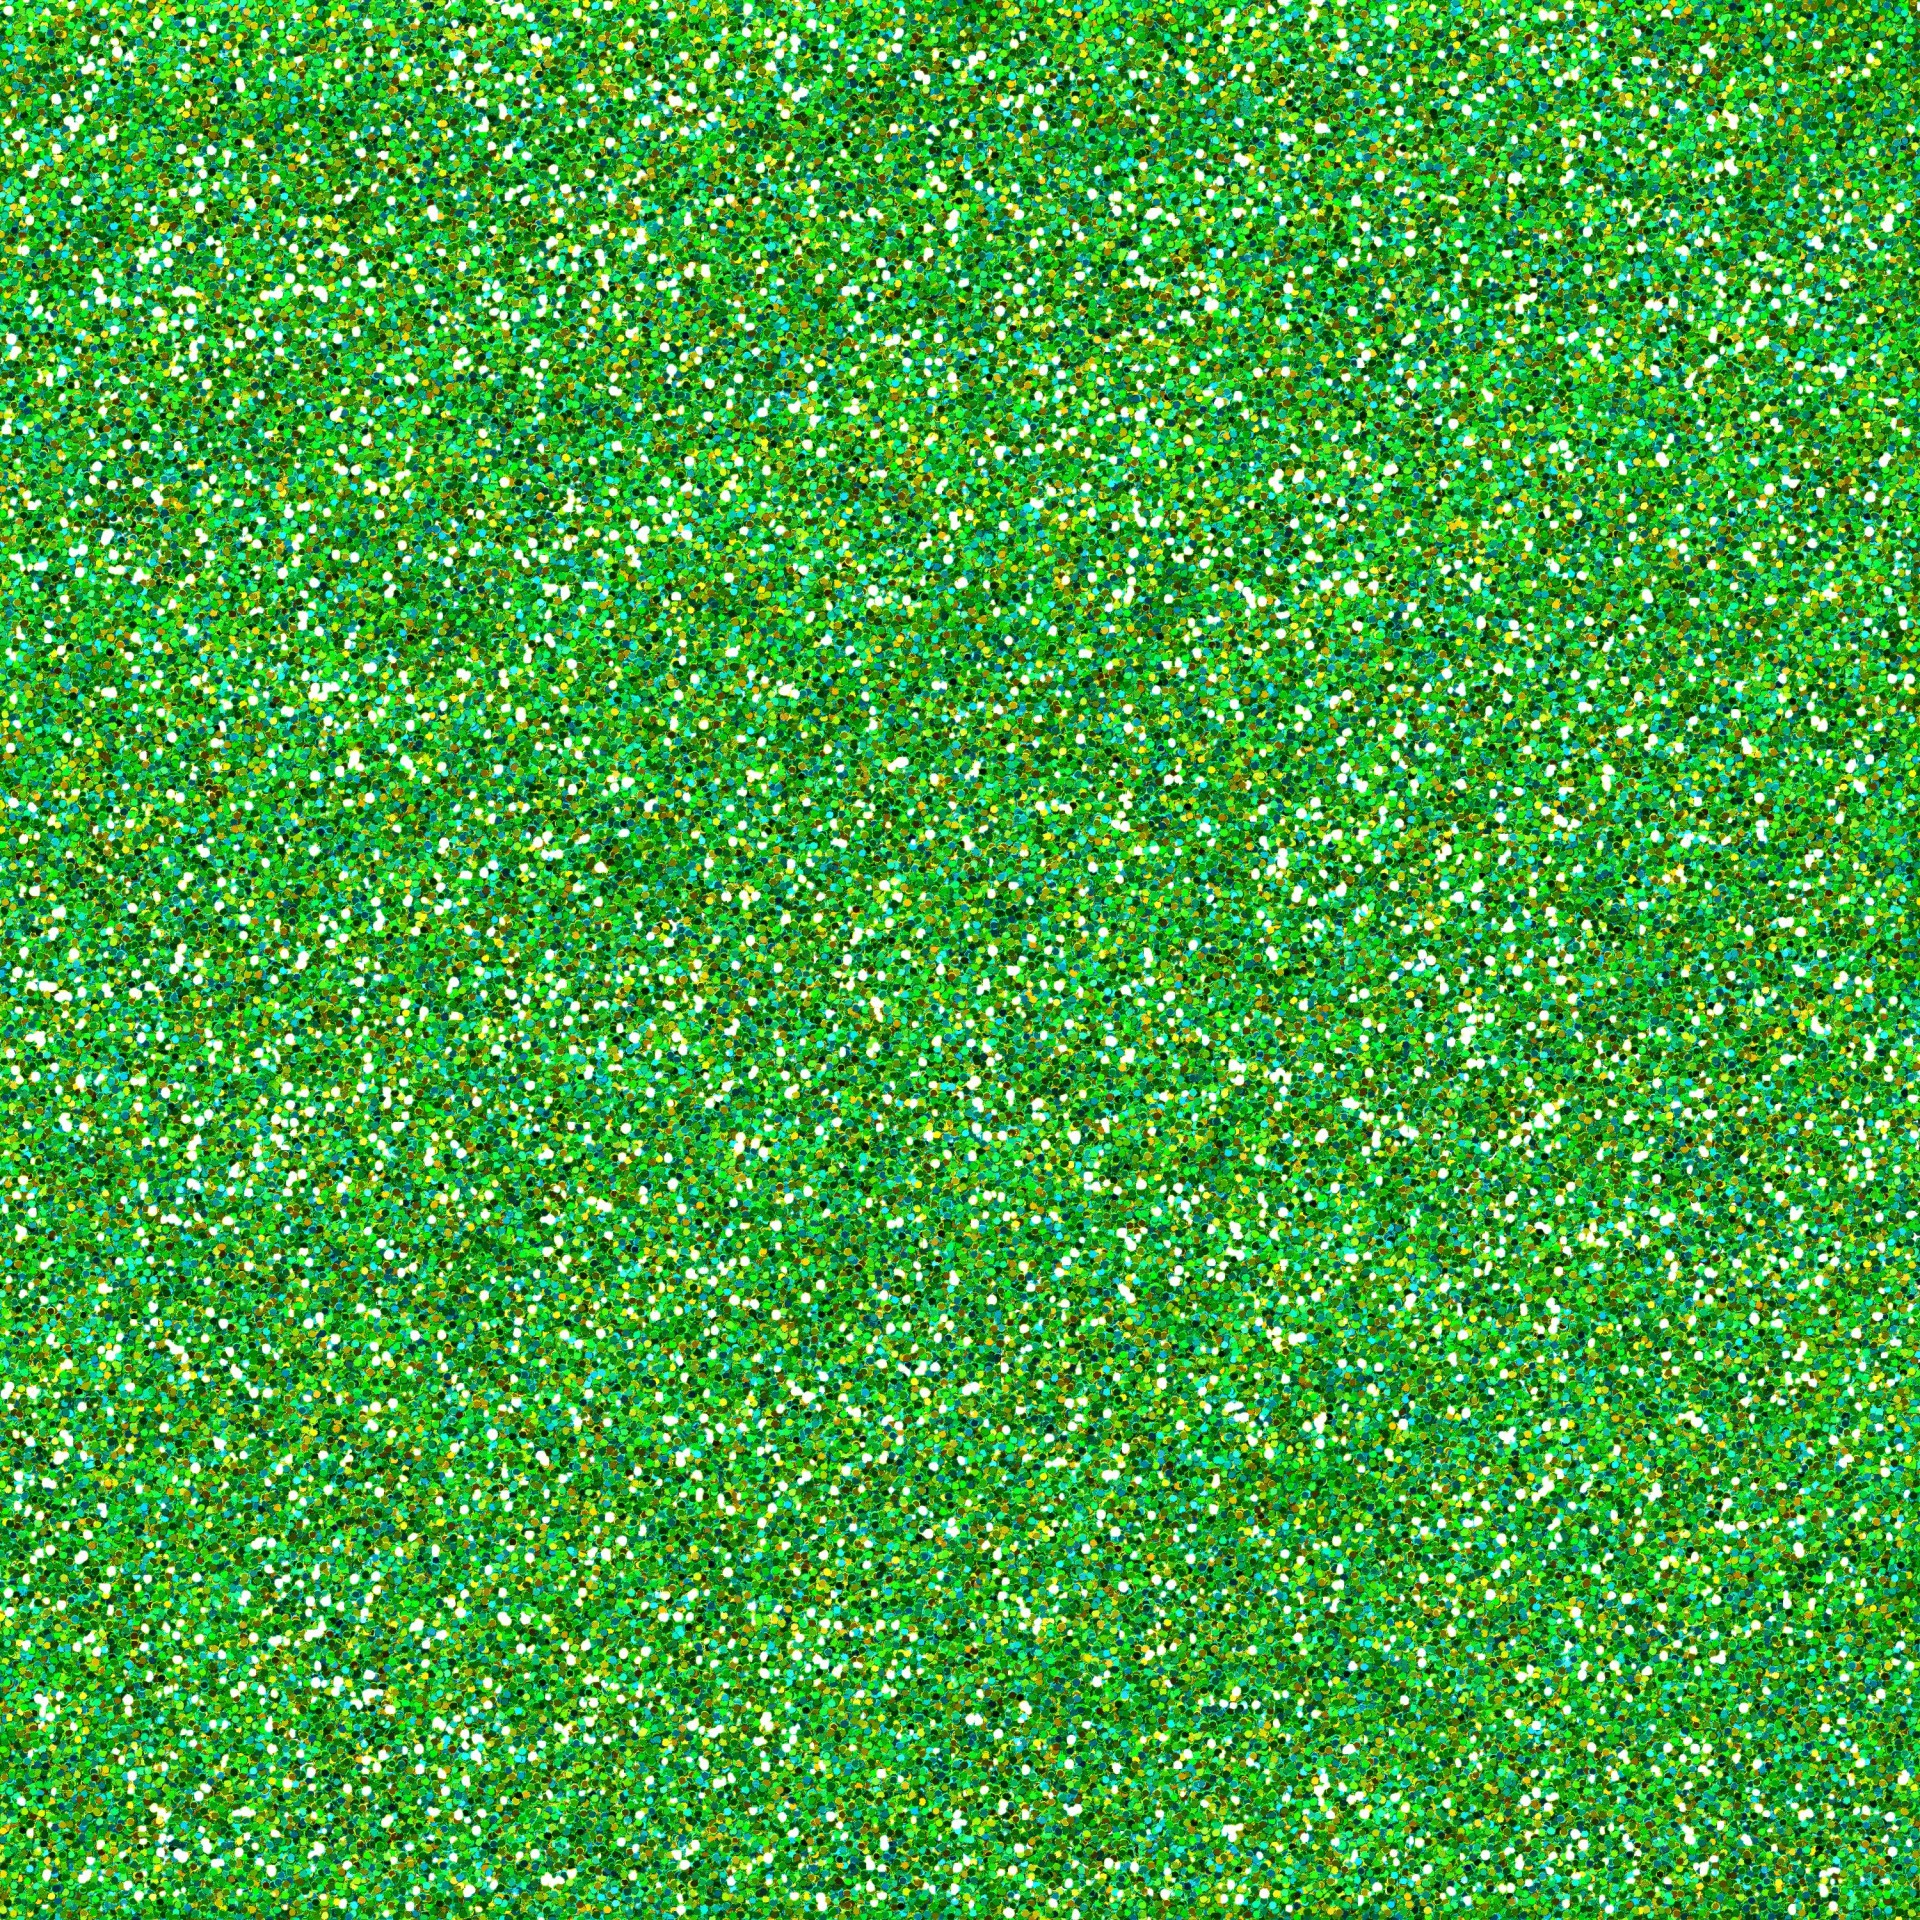 Metallic Green Glitter Texture Free Stock Photo Public Domain Pictures